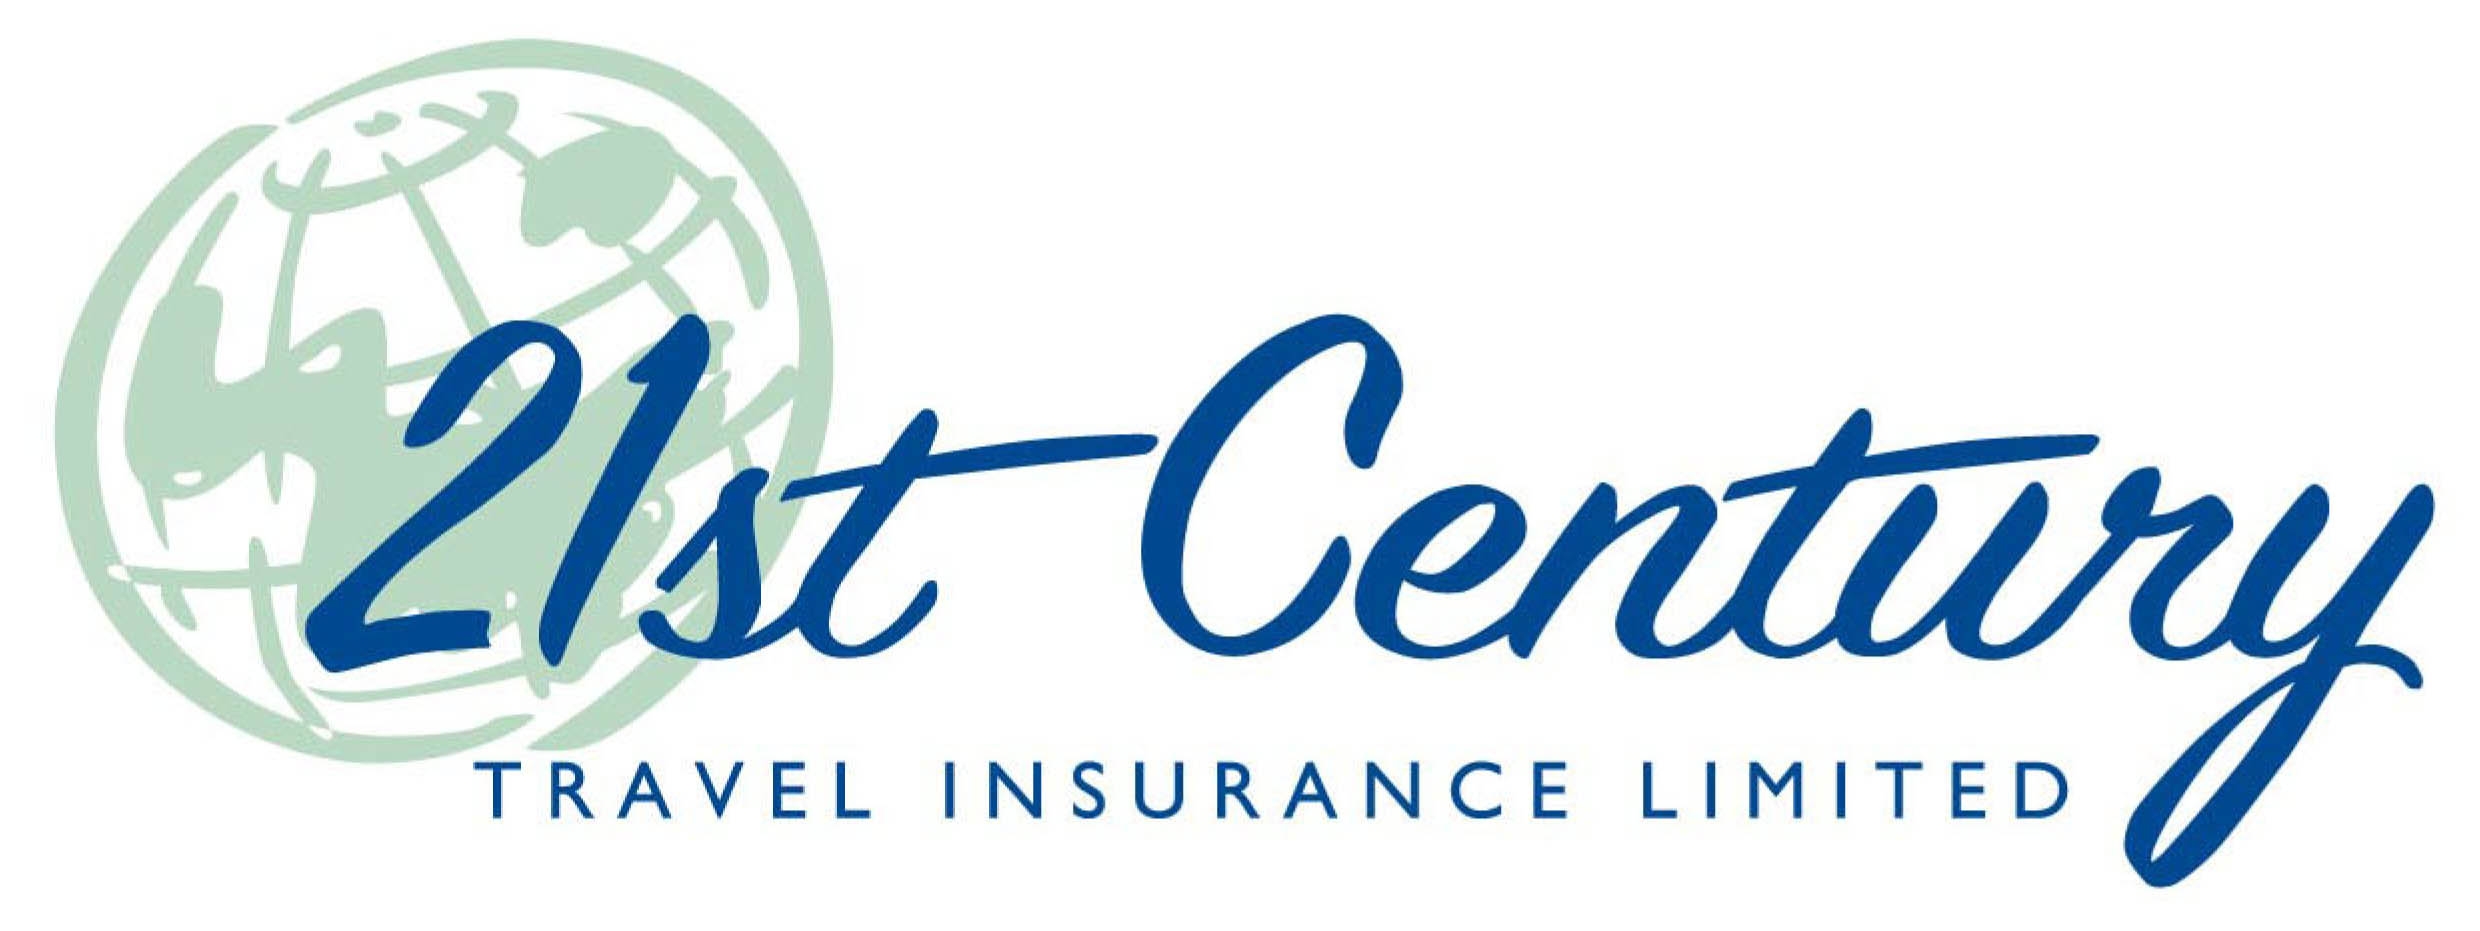 21st Century Travel Insurance